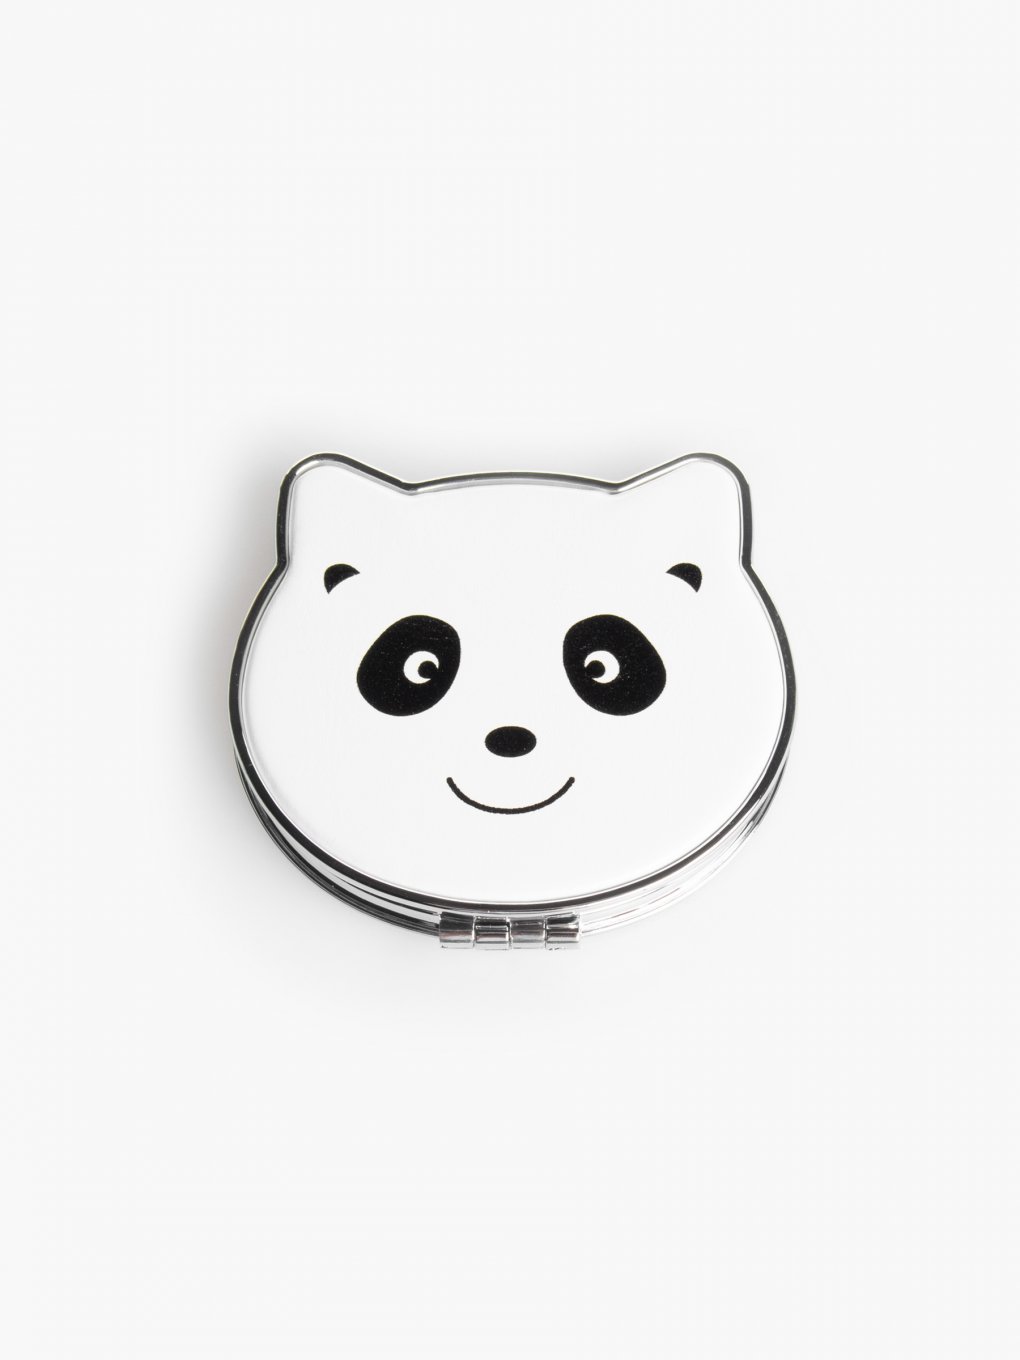 Panda shaped compact mirror